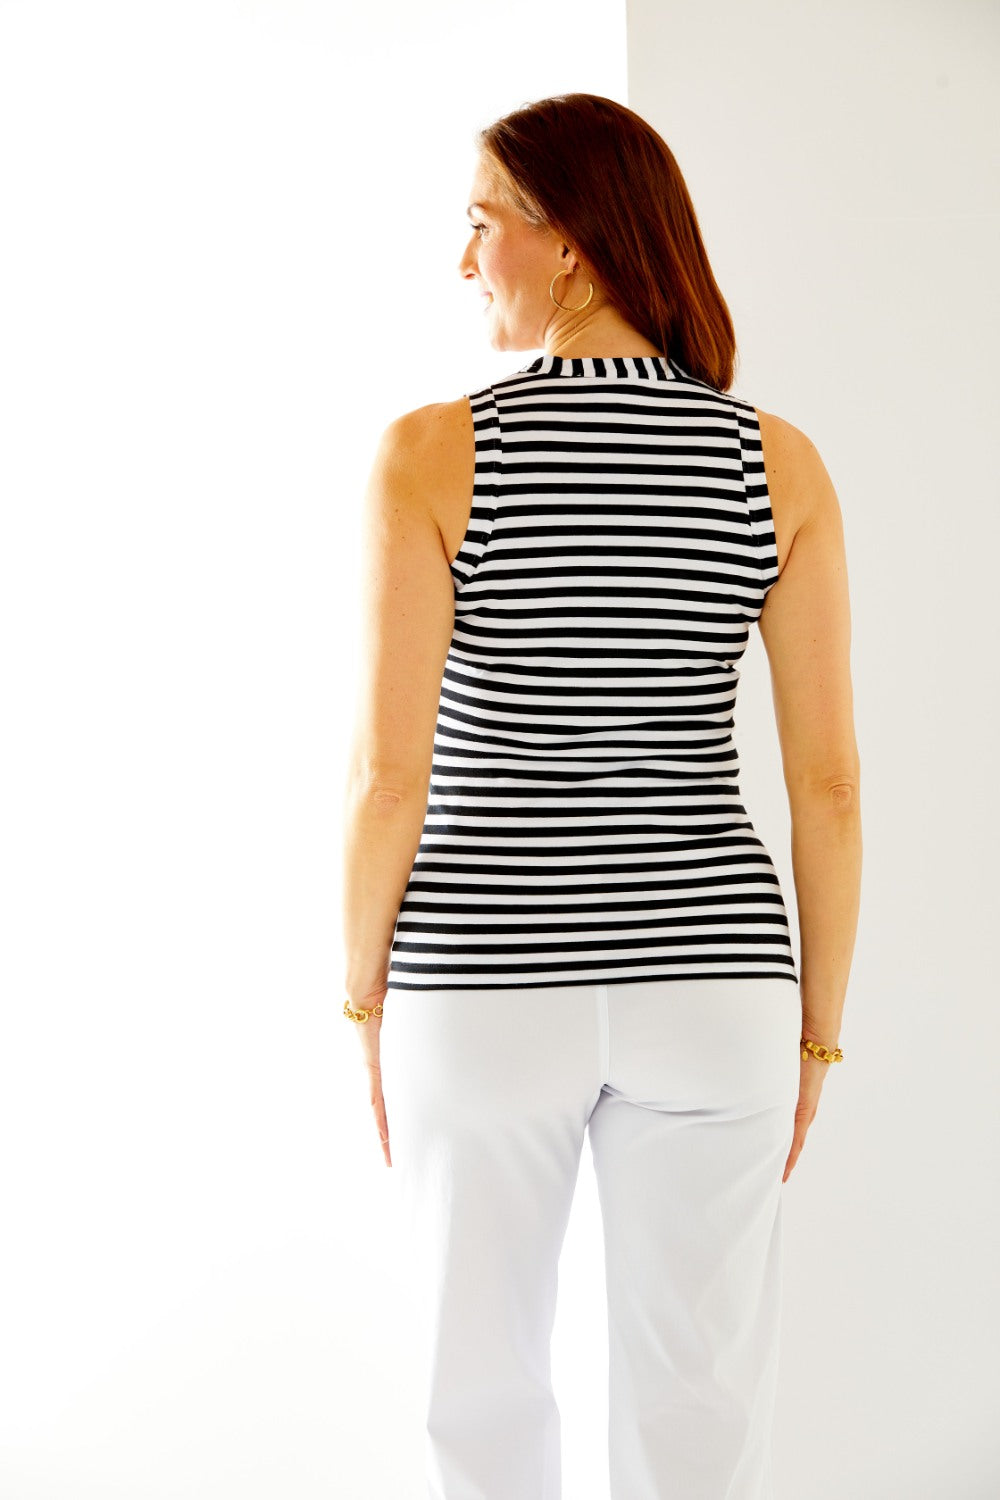 Woman in black/white stripe top